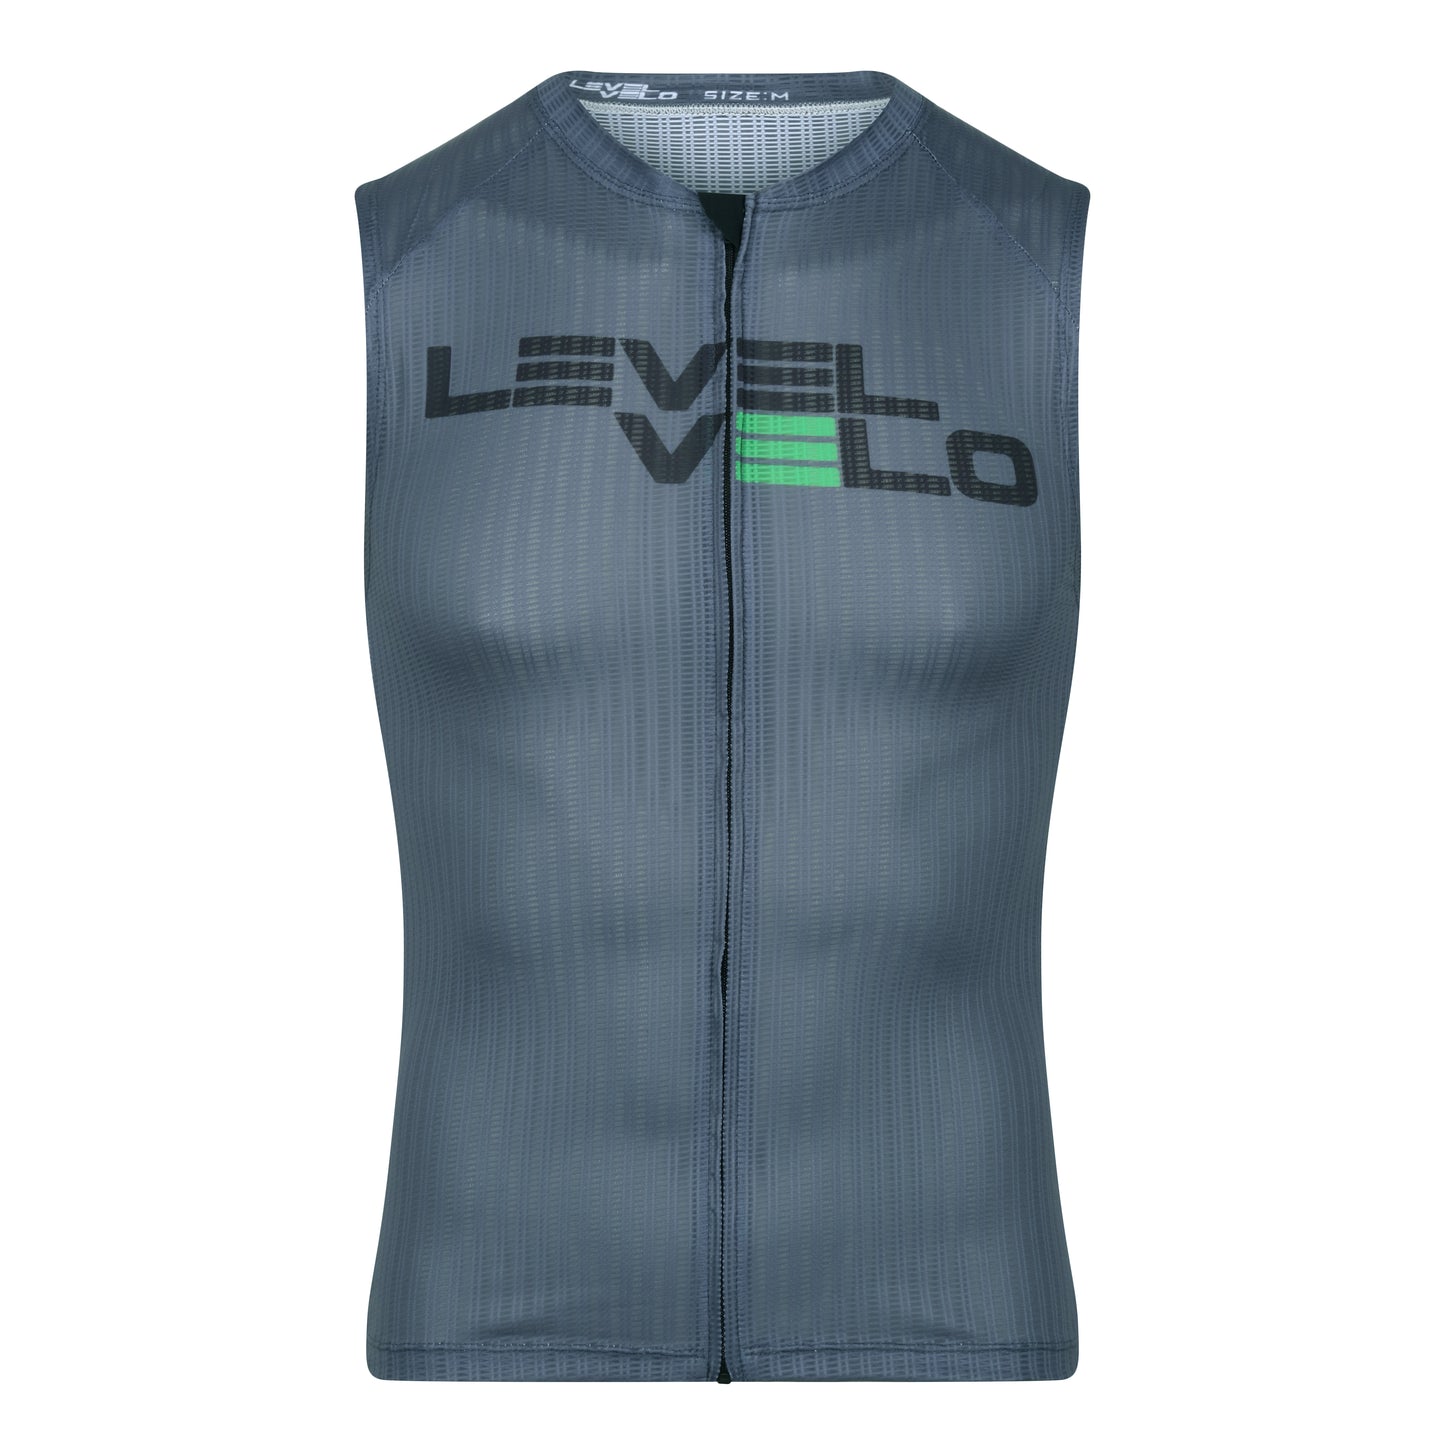 LEVEL Velo Indoor cycling elite vest grey